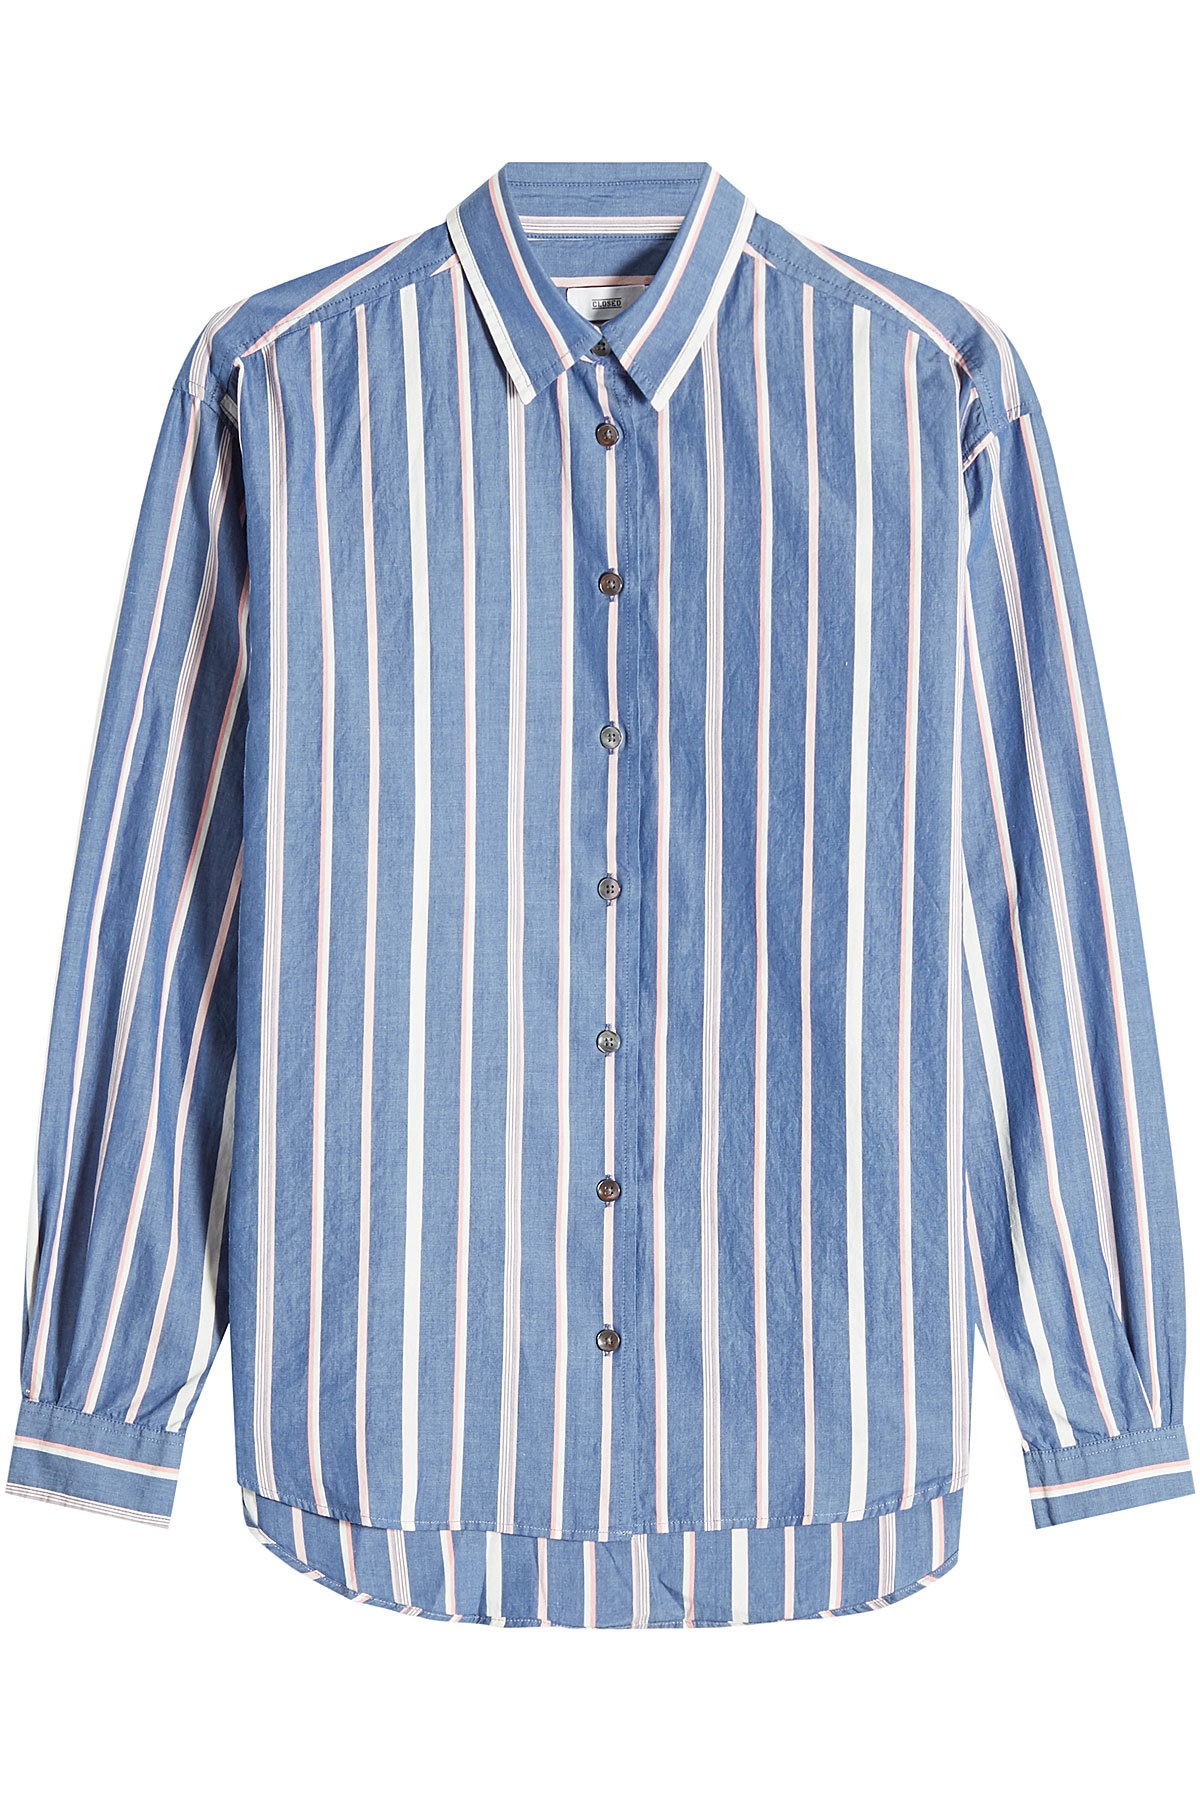 Closed - Aloise Striped Cotton Shirt